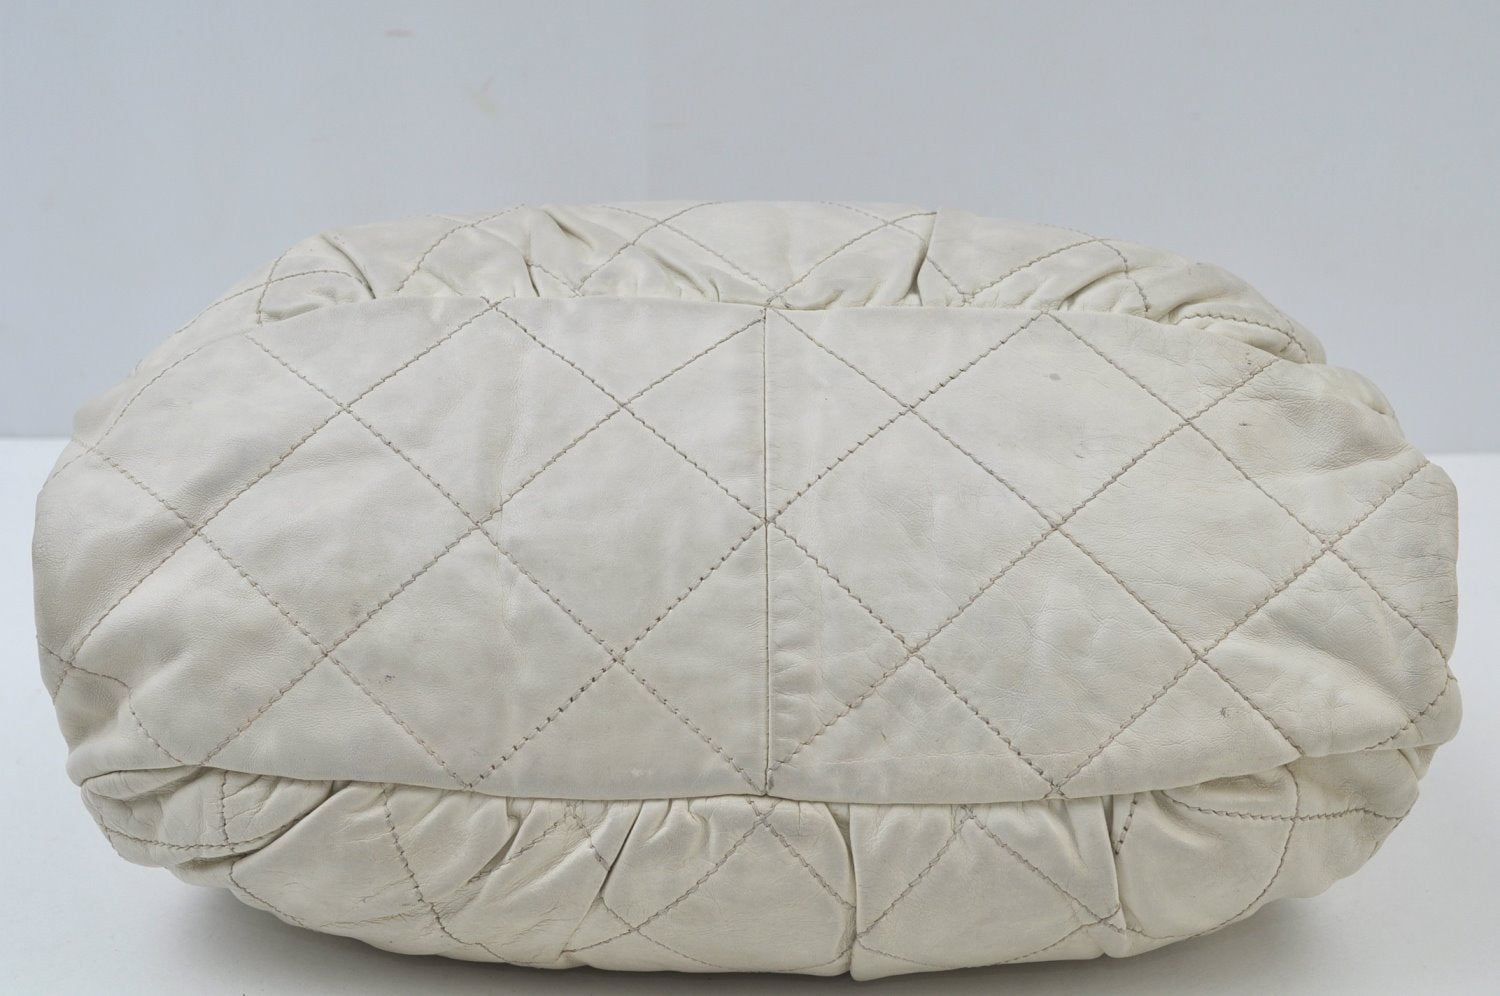 Authentic CHANEL Calf Skin Matelasse Chain Shoulder Bag Purse White CC 8468G